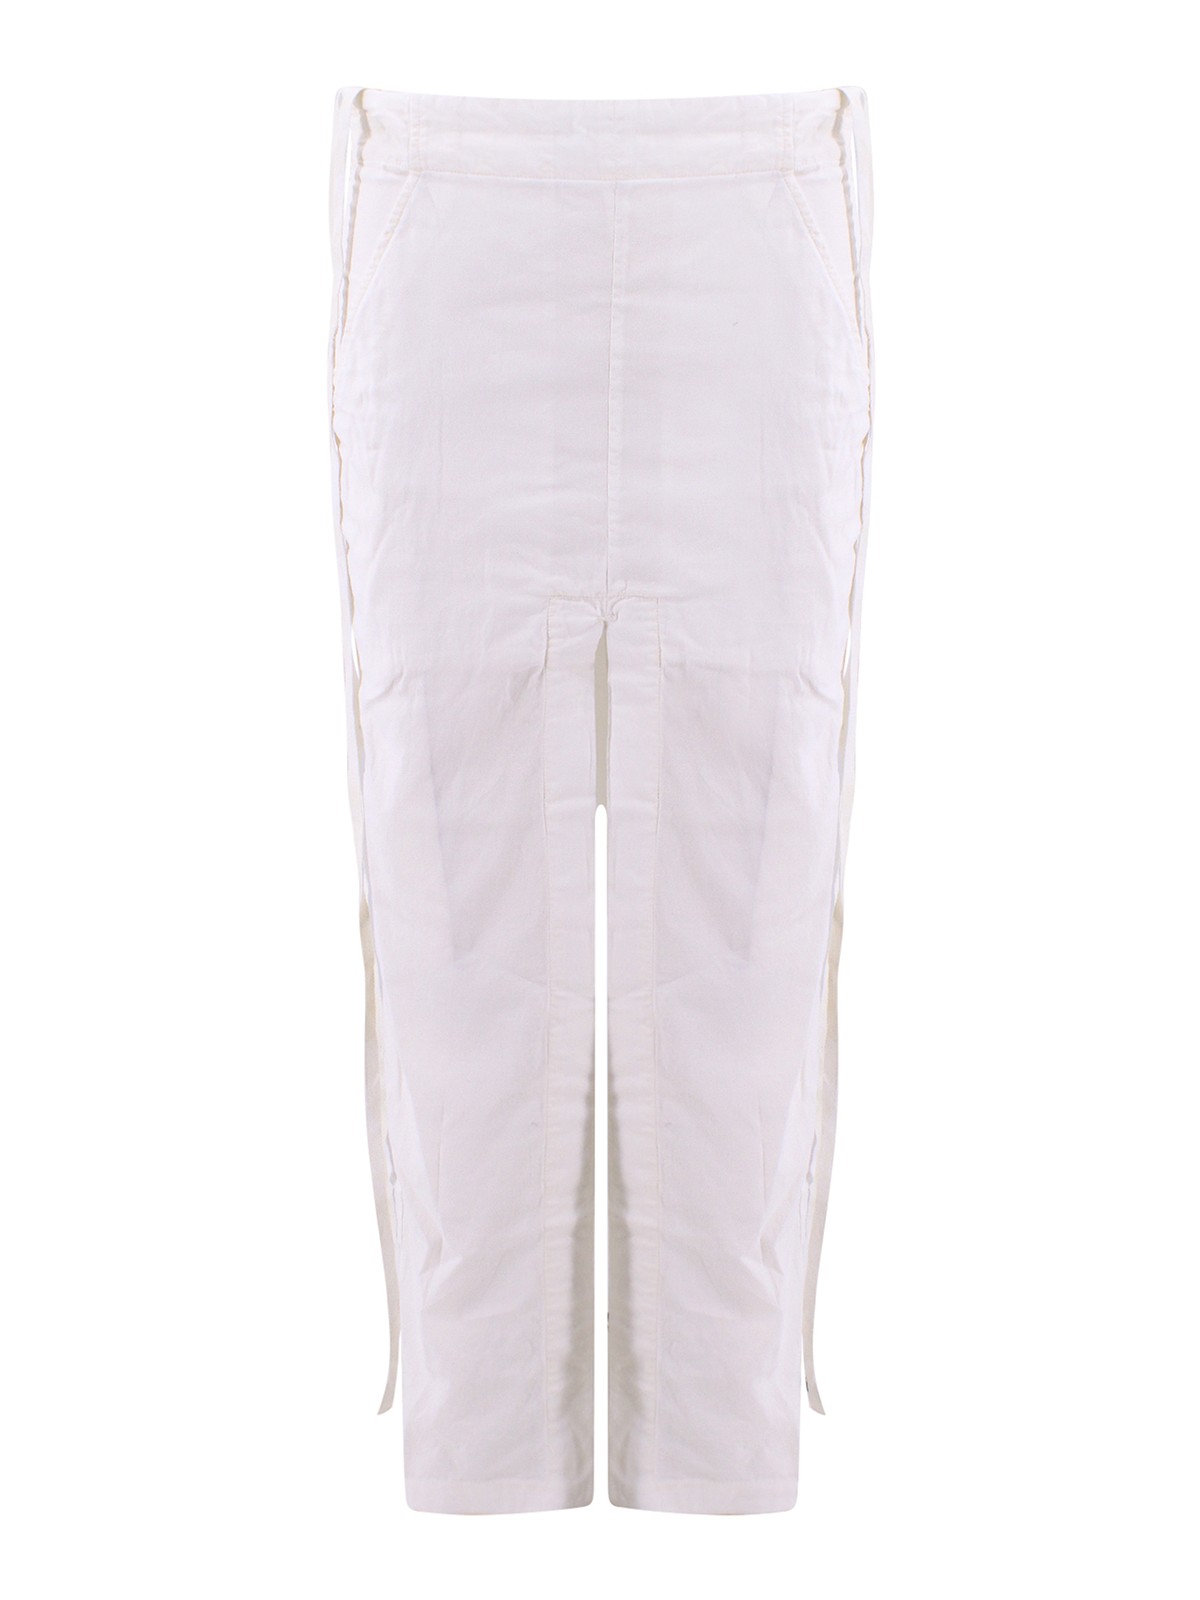 Ann Demeulemeester Long Cotton Skirt With Slits In White